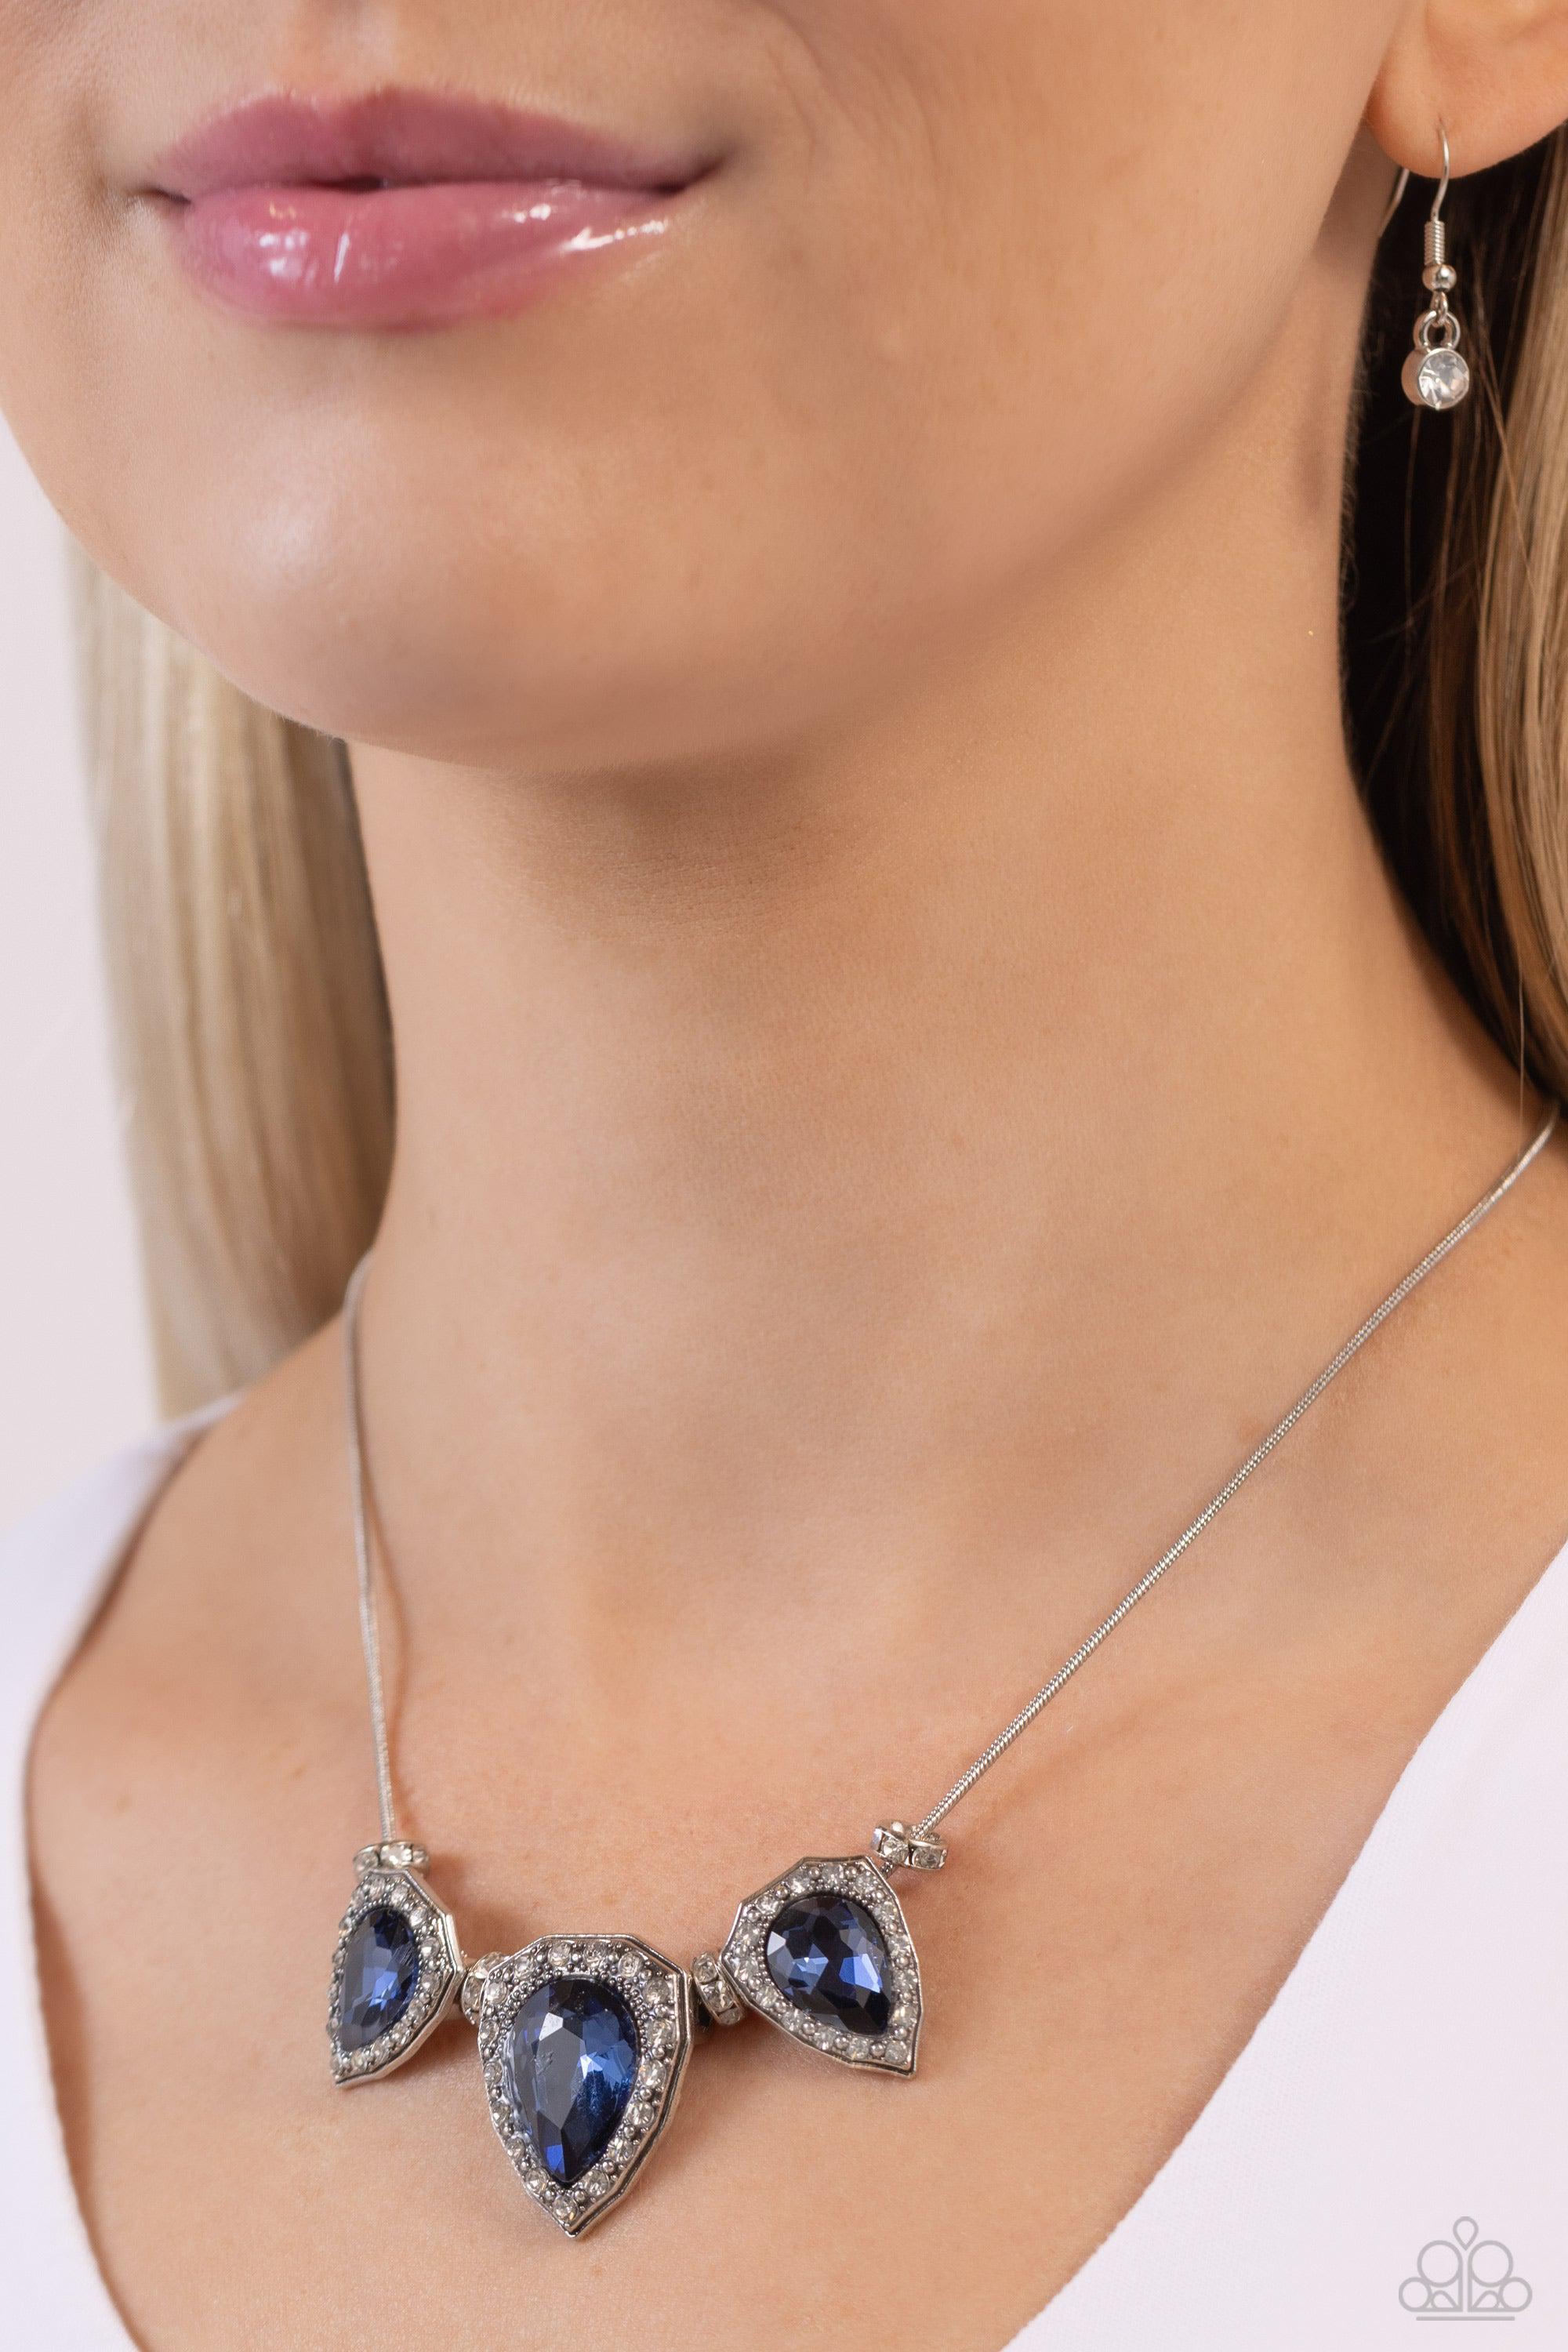 Majestic Met Ball Blue Rhinestone Necklace - Paparazzi Accessories- lightbox - CarasShop.com - $5 Jewelry by Cara Jewels